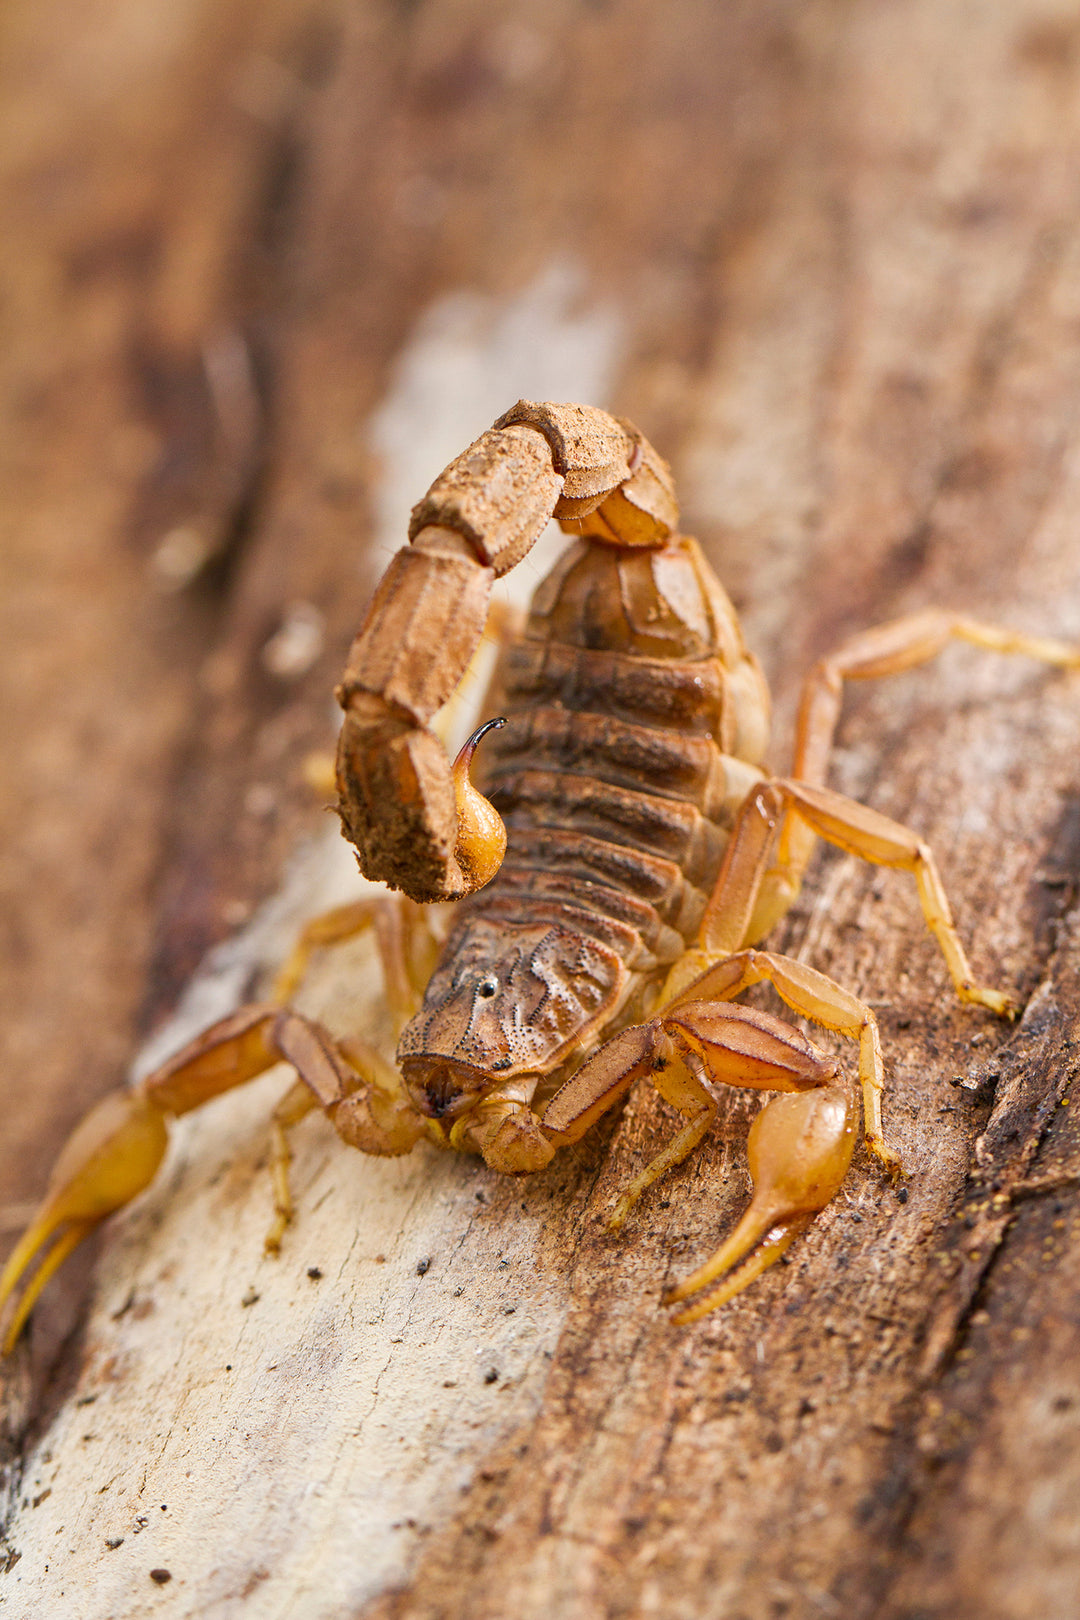  A real manchurian scorpion, an ingredient in Original Scorpion Bitters.